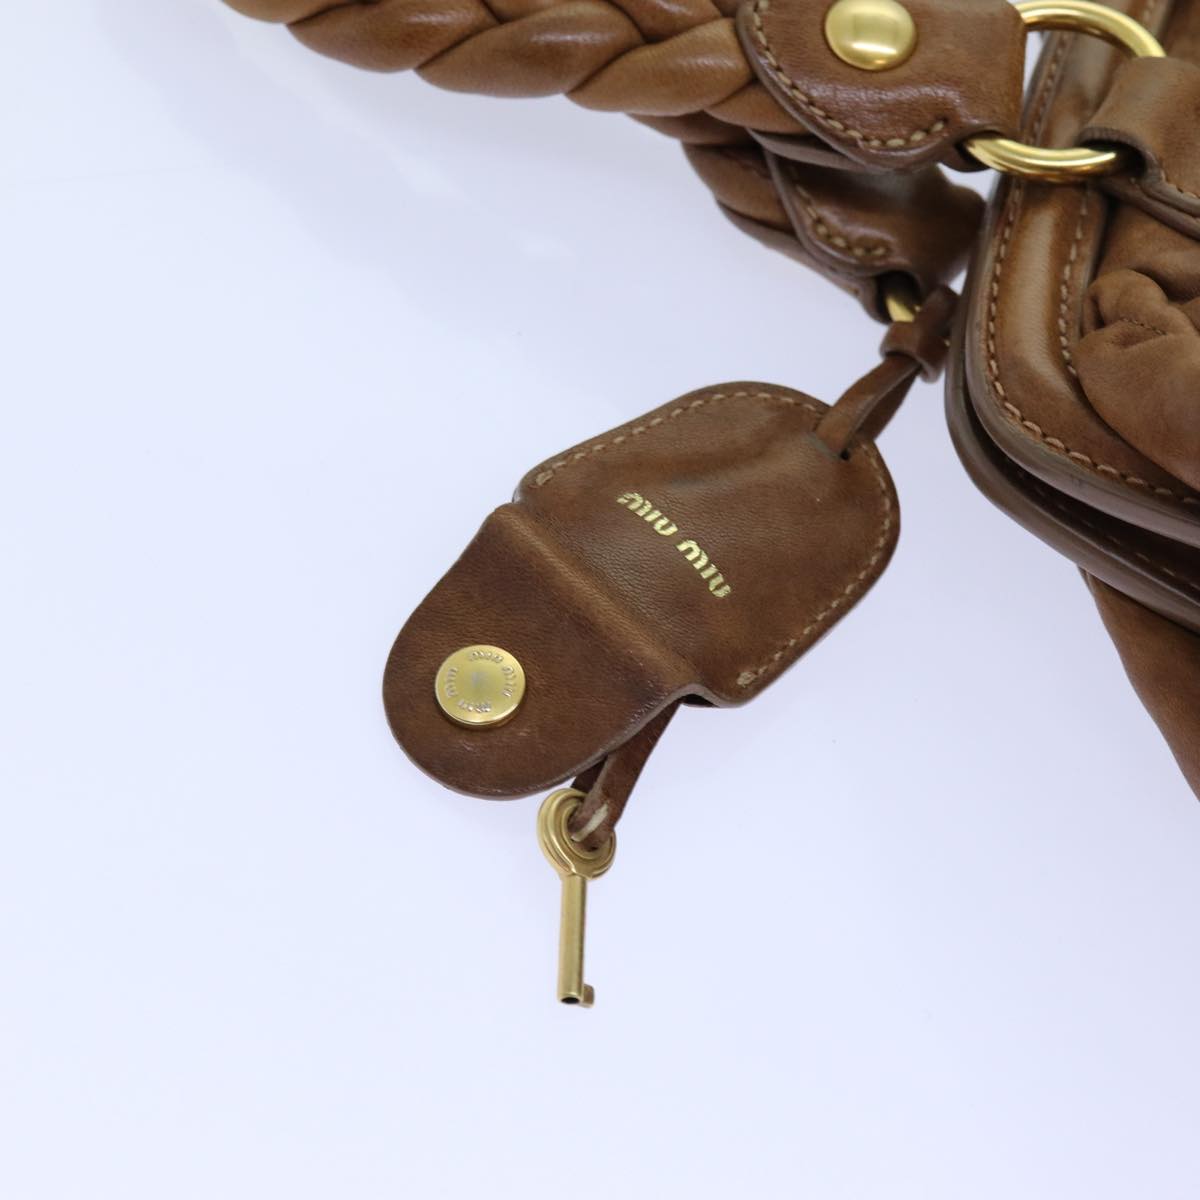 Miu Miu Hand Bag Leather Brown Auth 71584